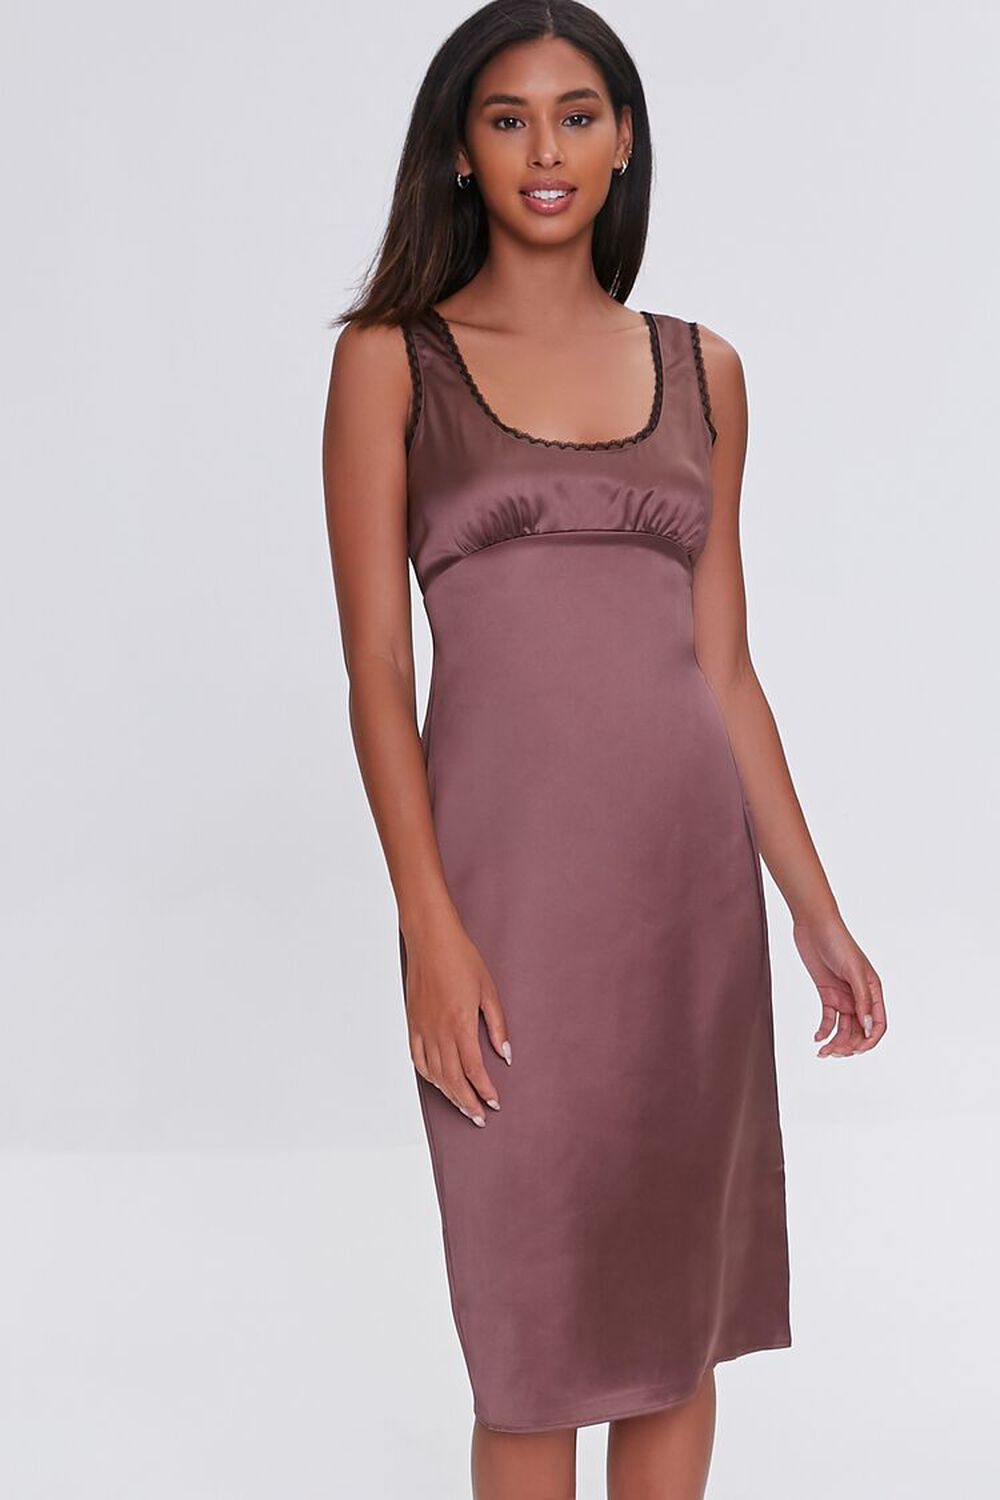 BROWN Satin Lace-Trim Dress, image 1